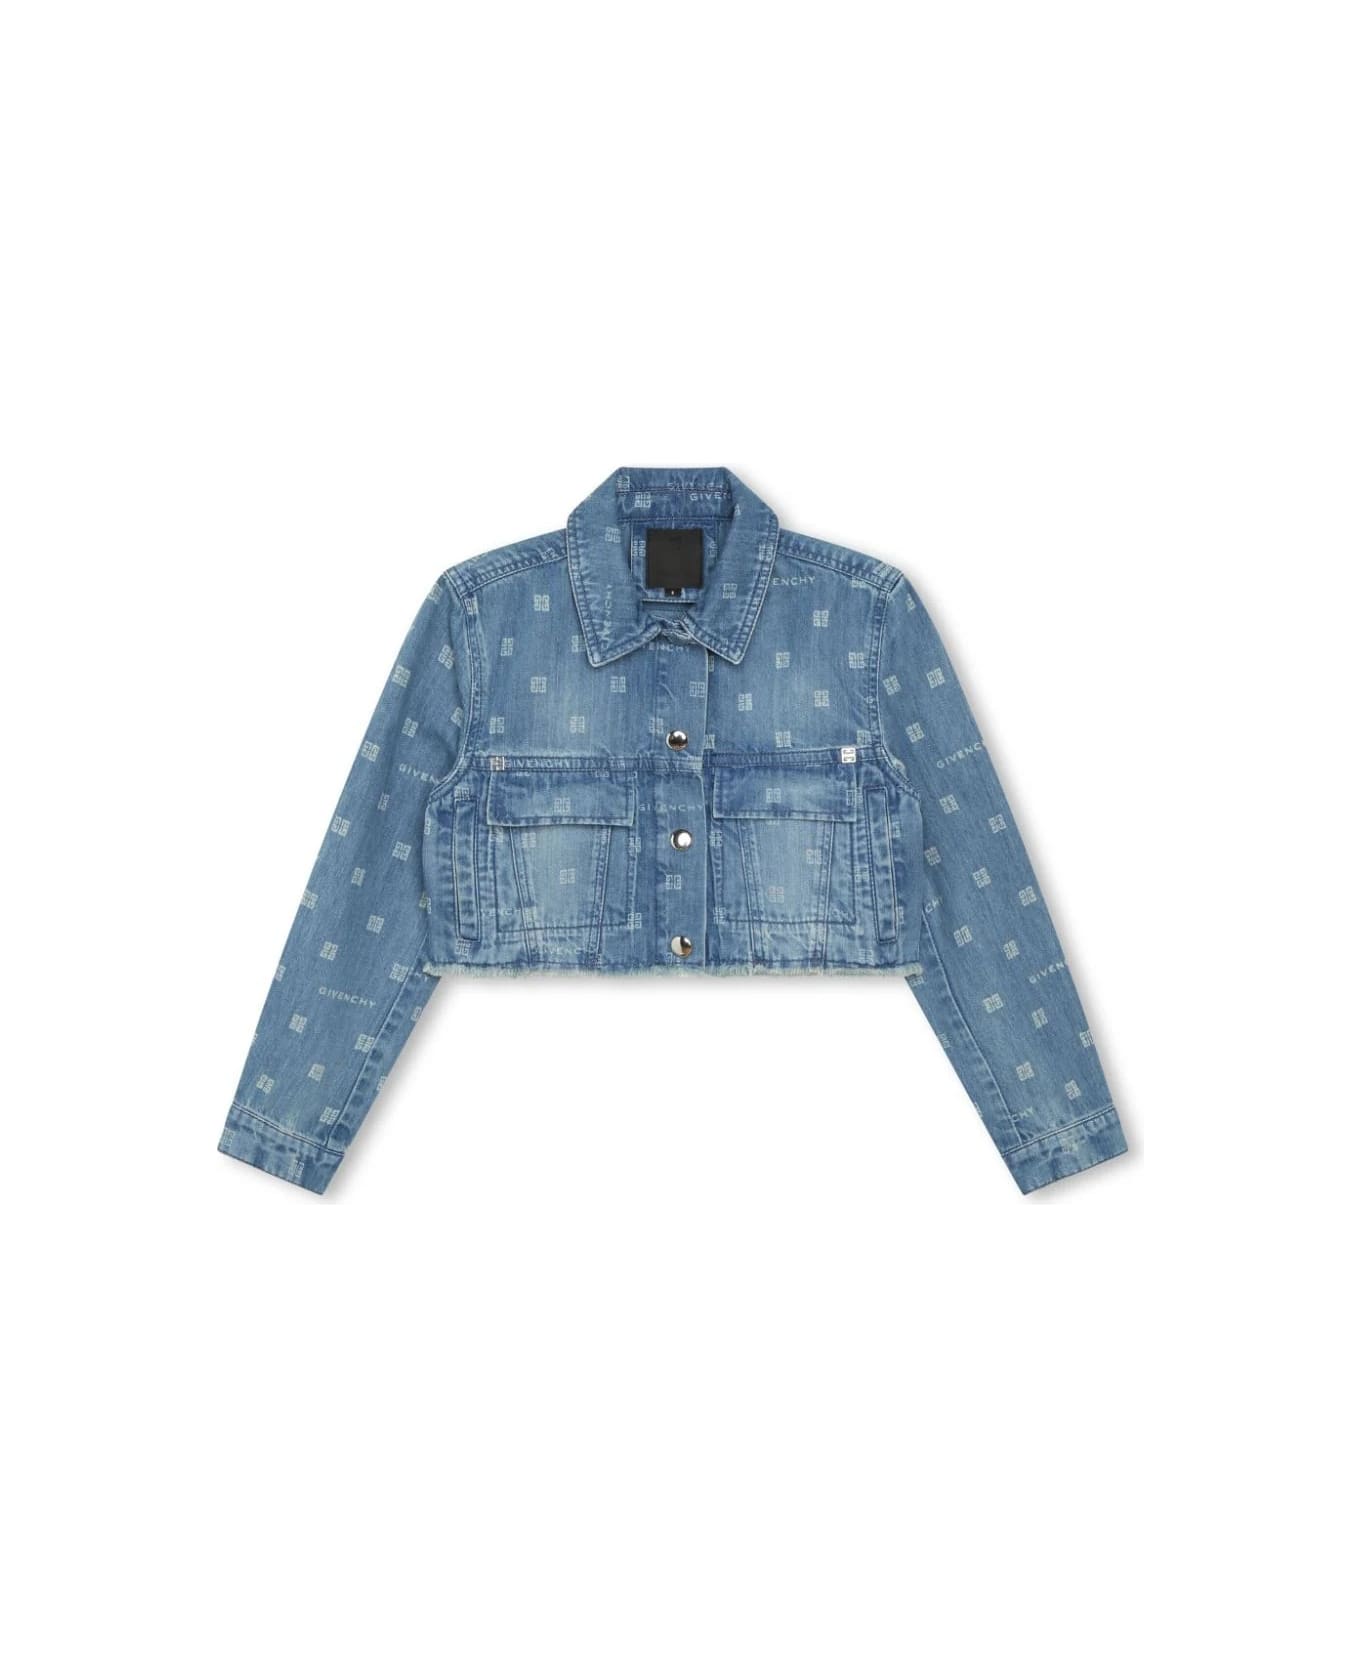 Givenchy 4g Crop Jacket In Blue Denim - Blue